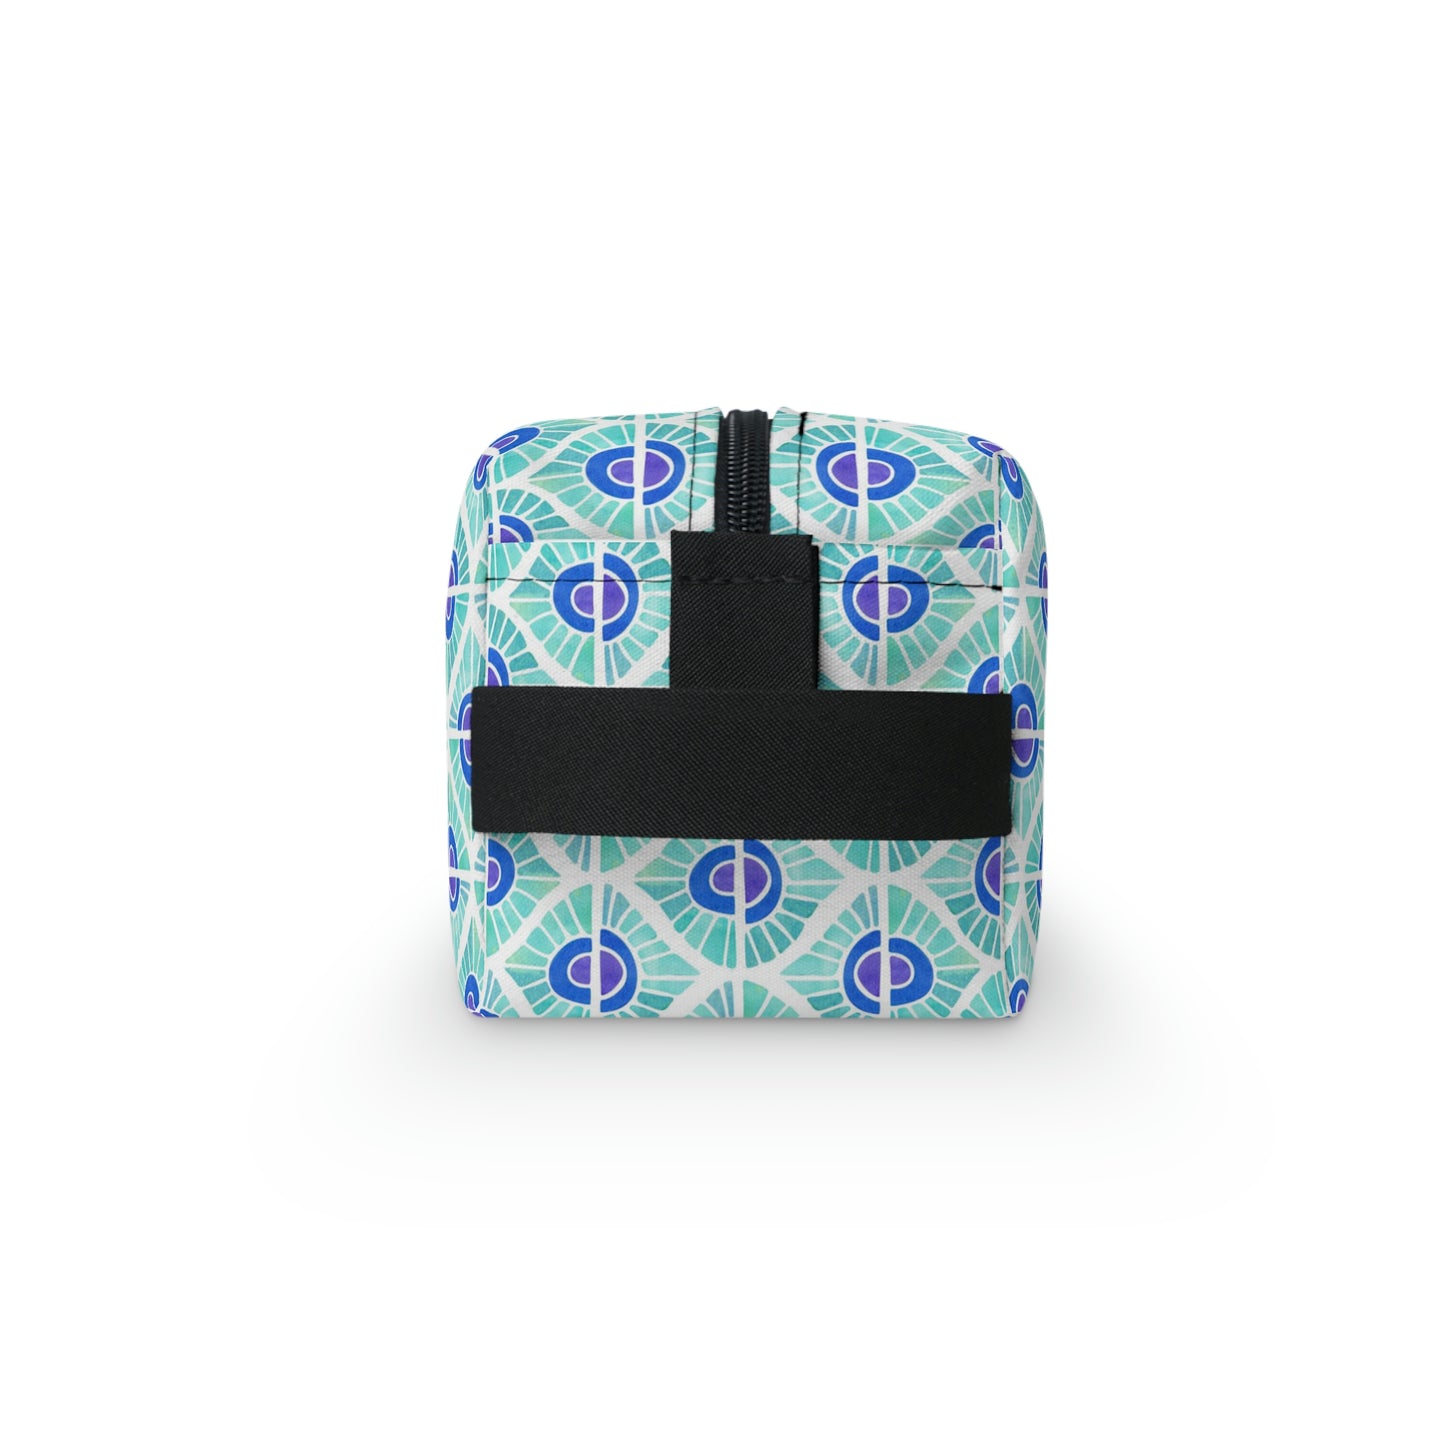 Turquoise Bay- Dopp Kit Toiletry Bag